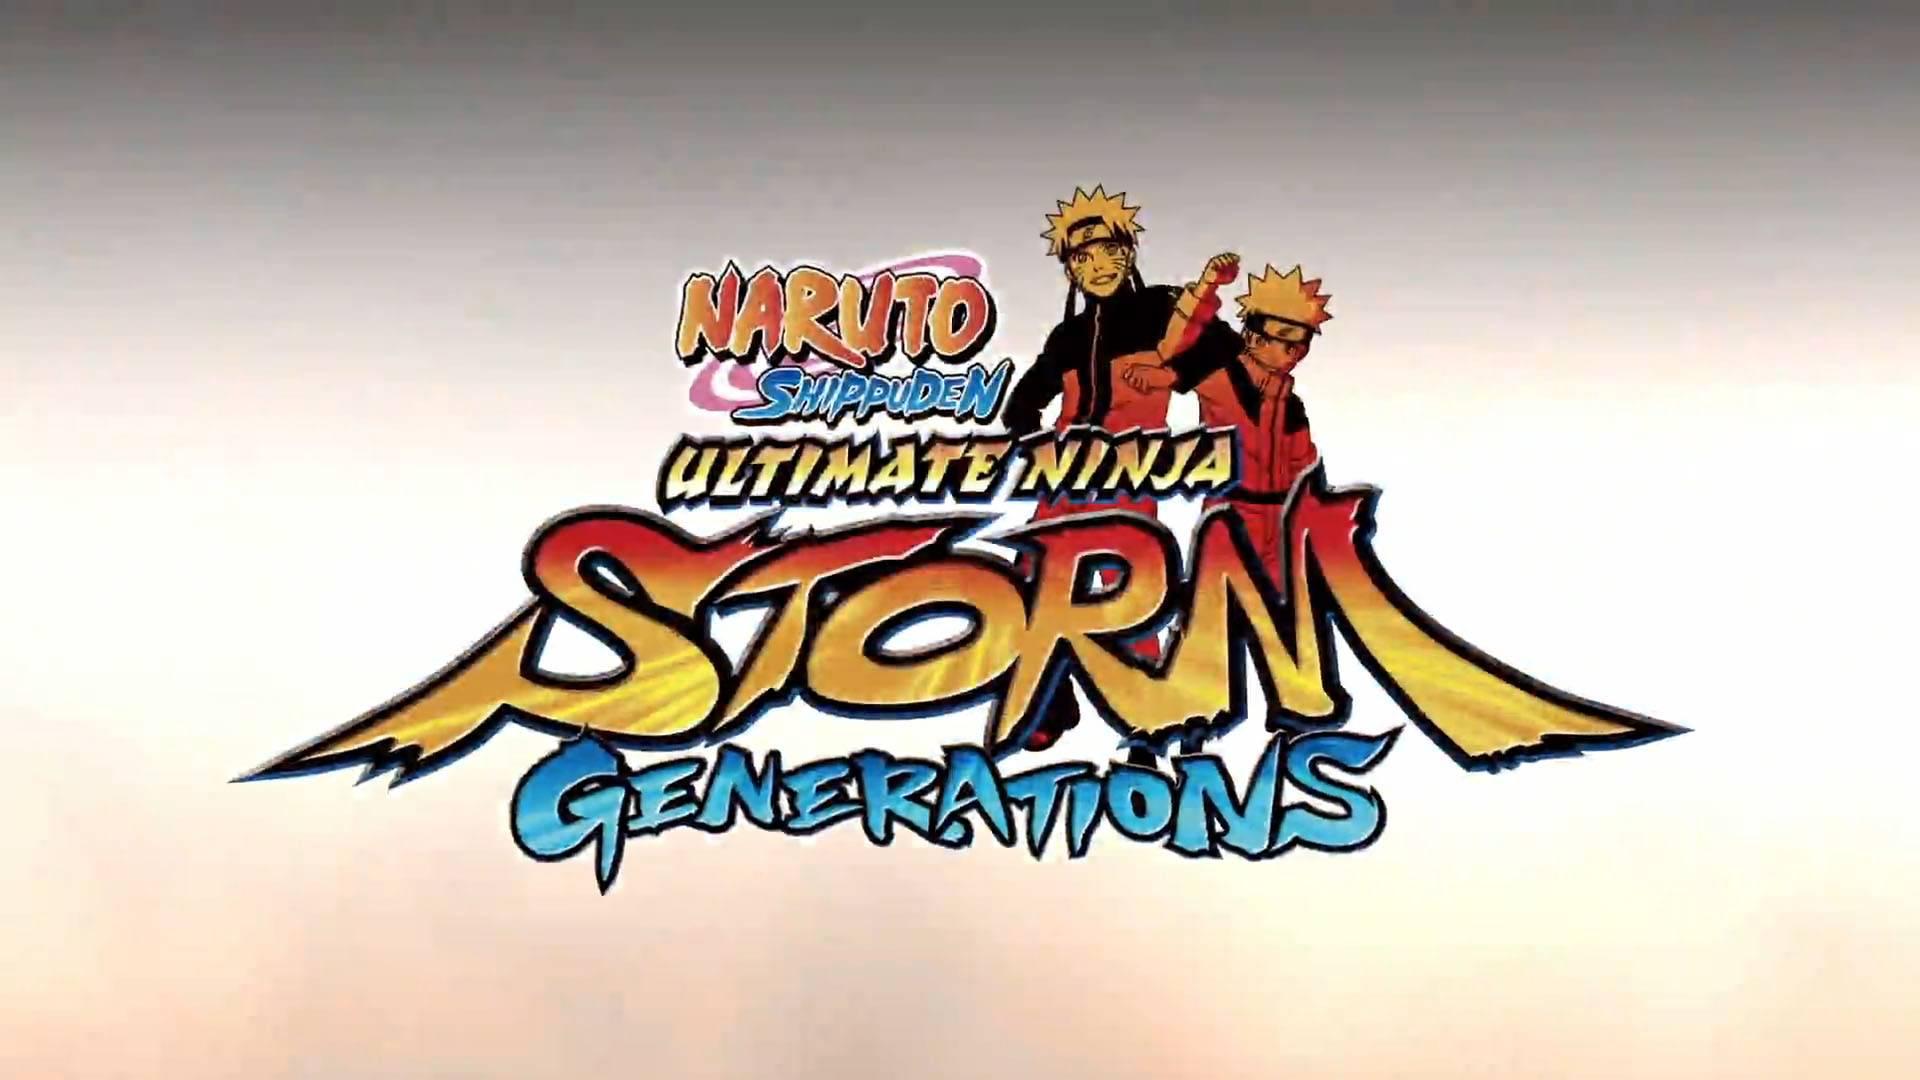 Naruto Shippuden Ultimate Ninja Storm Generations Wallpaper in HD